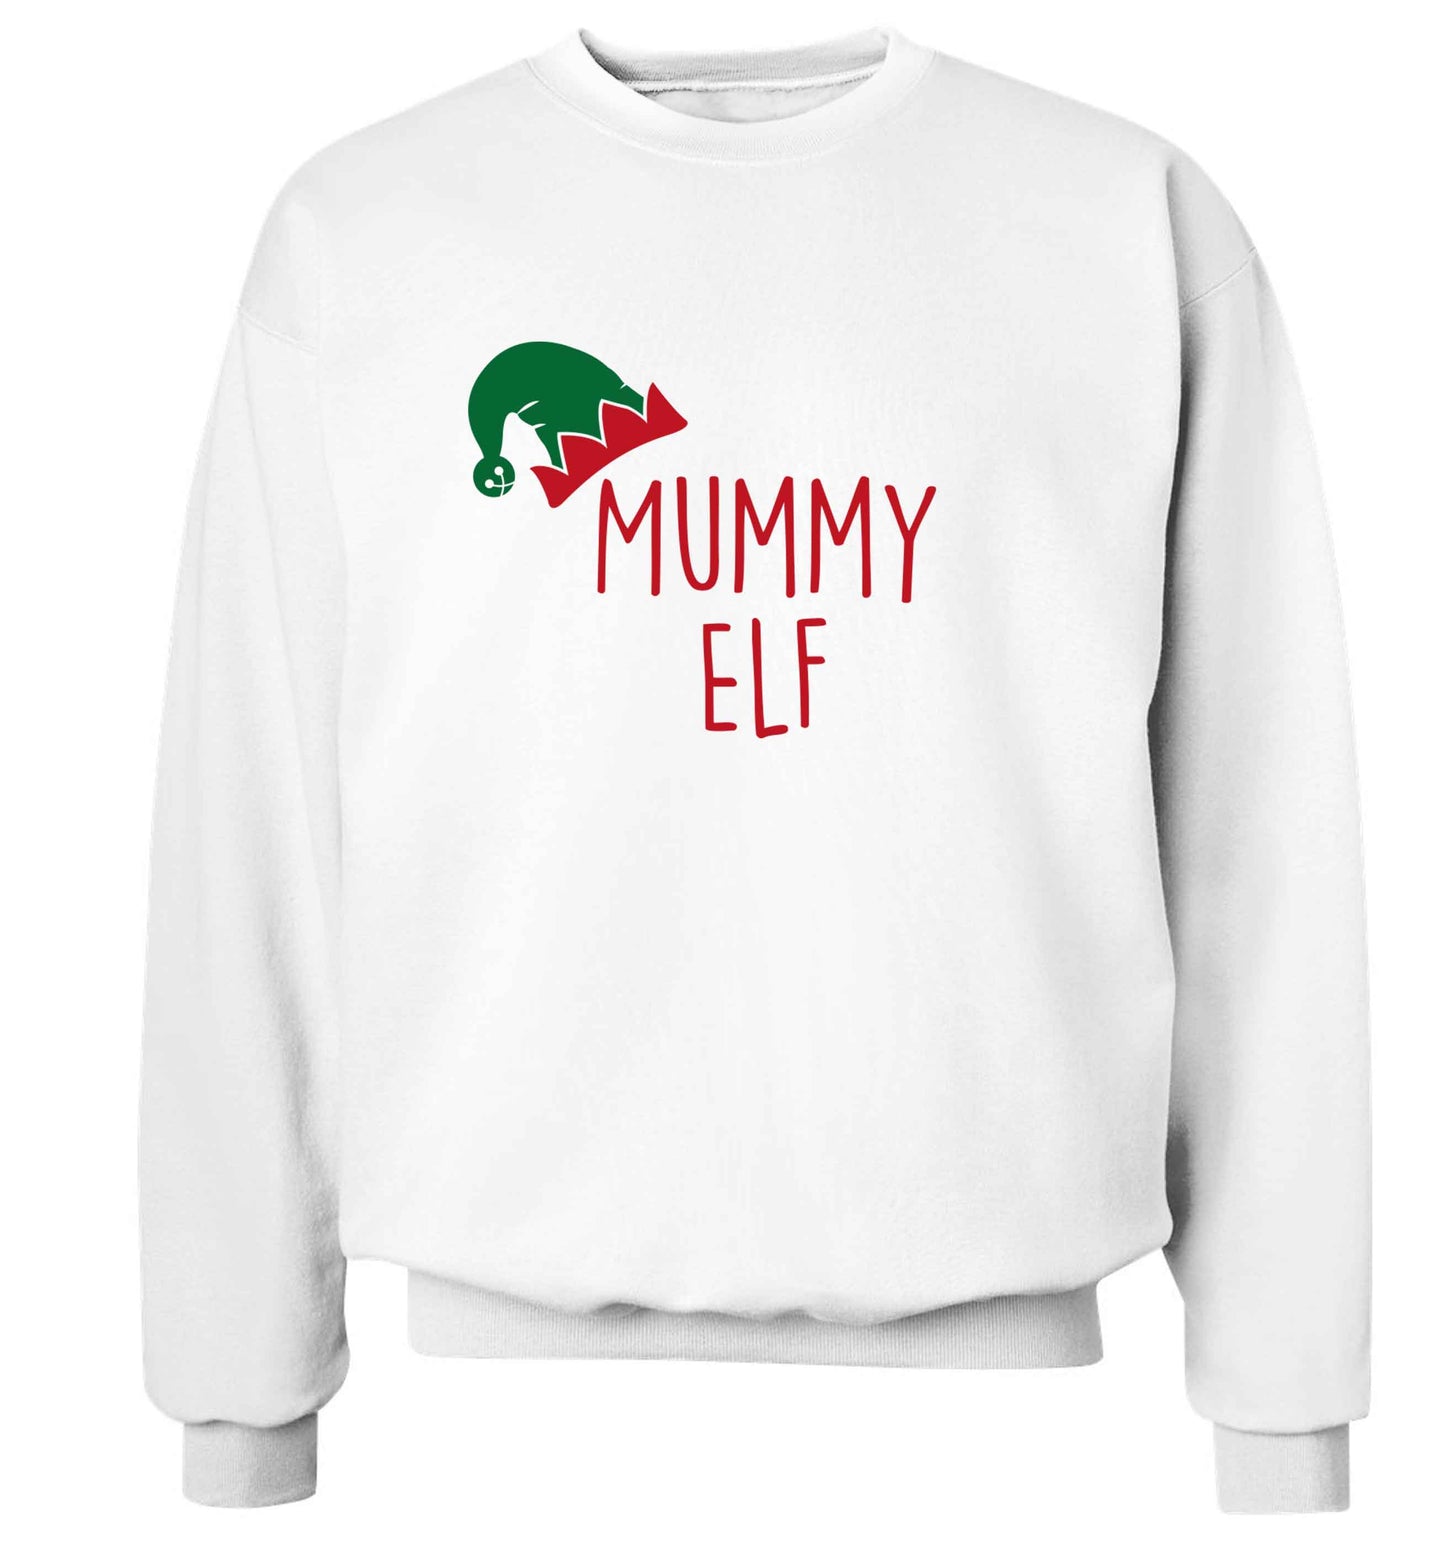 Mummy elf adult's unisex white sweater 2XL